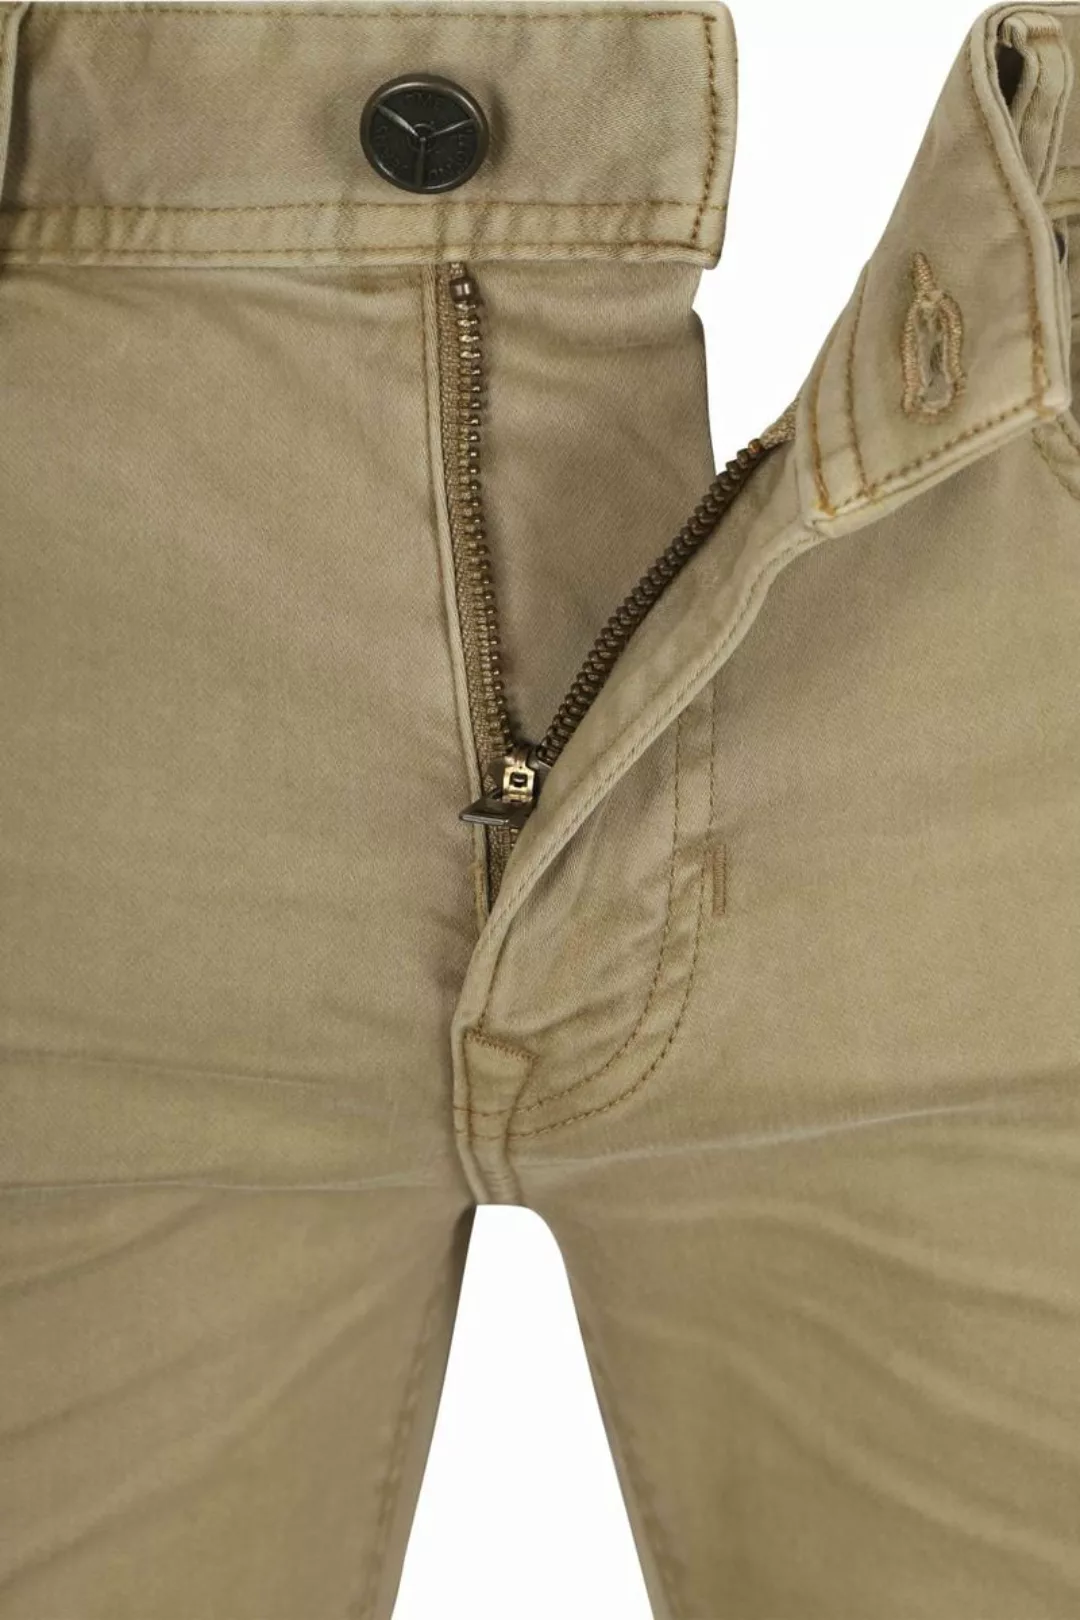 PME Legend Tailwheel Jeans Khaki - Größe W 38 - L 34 günstig online kaufen